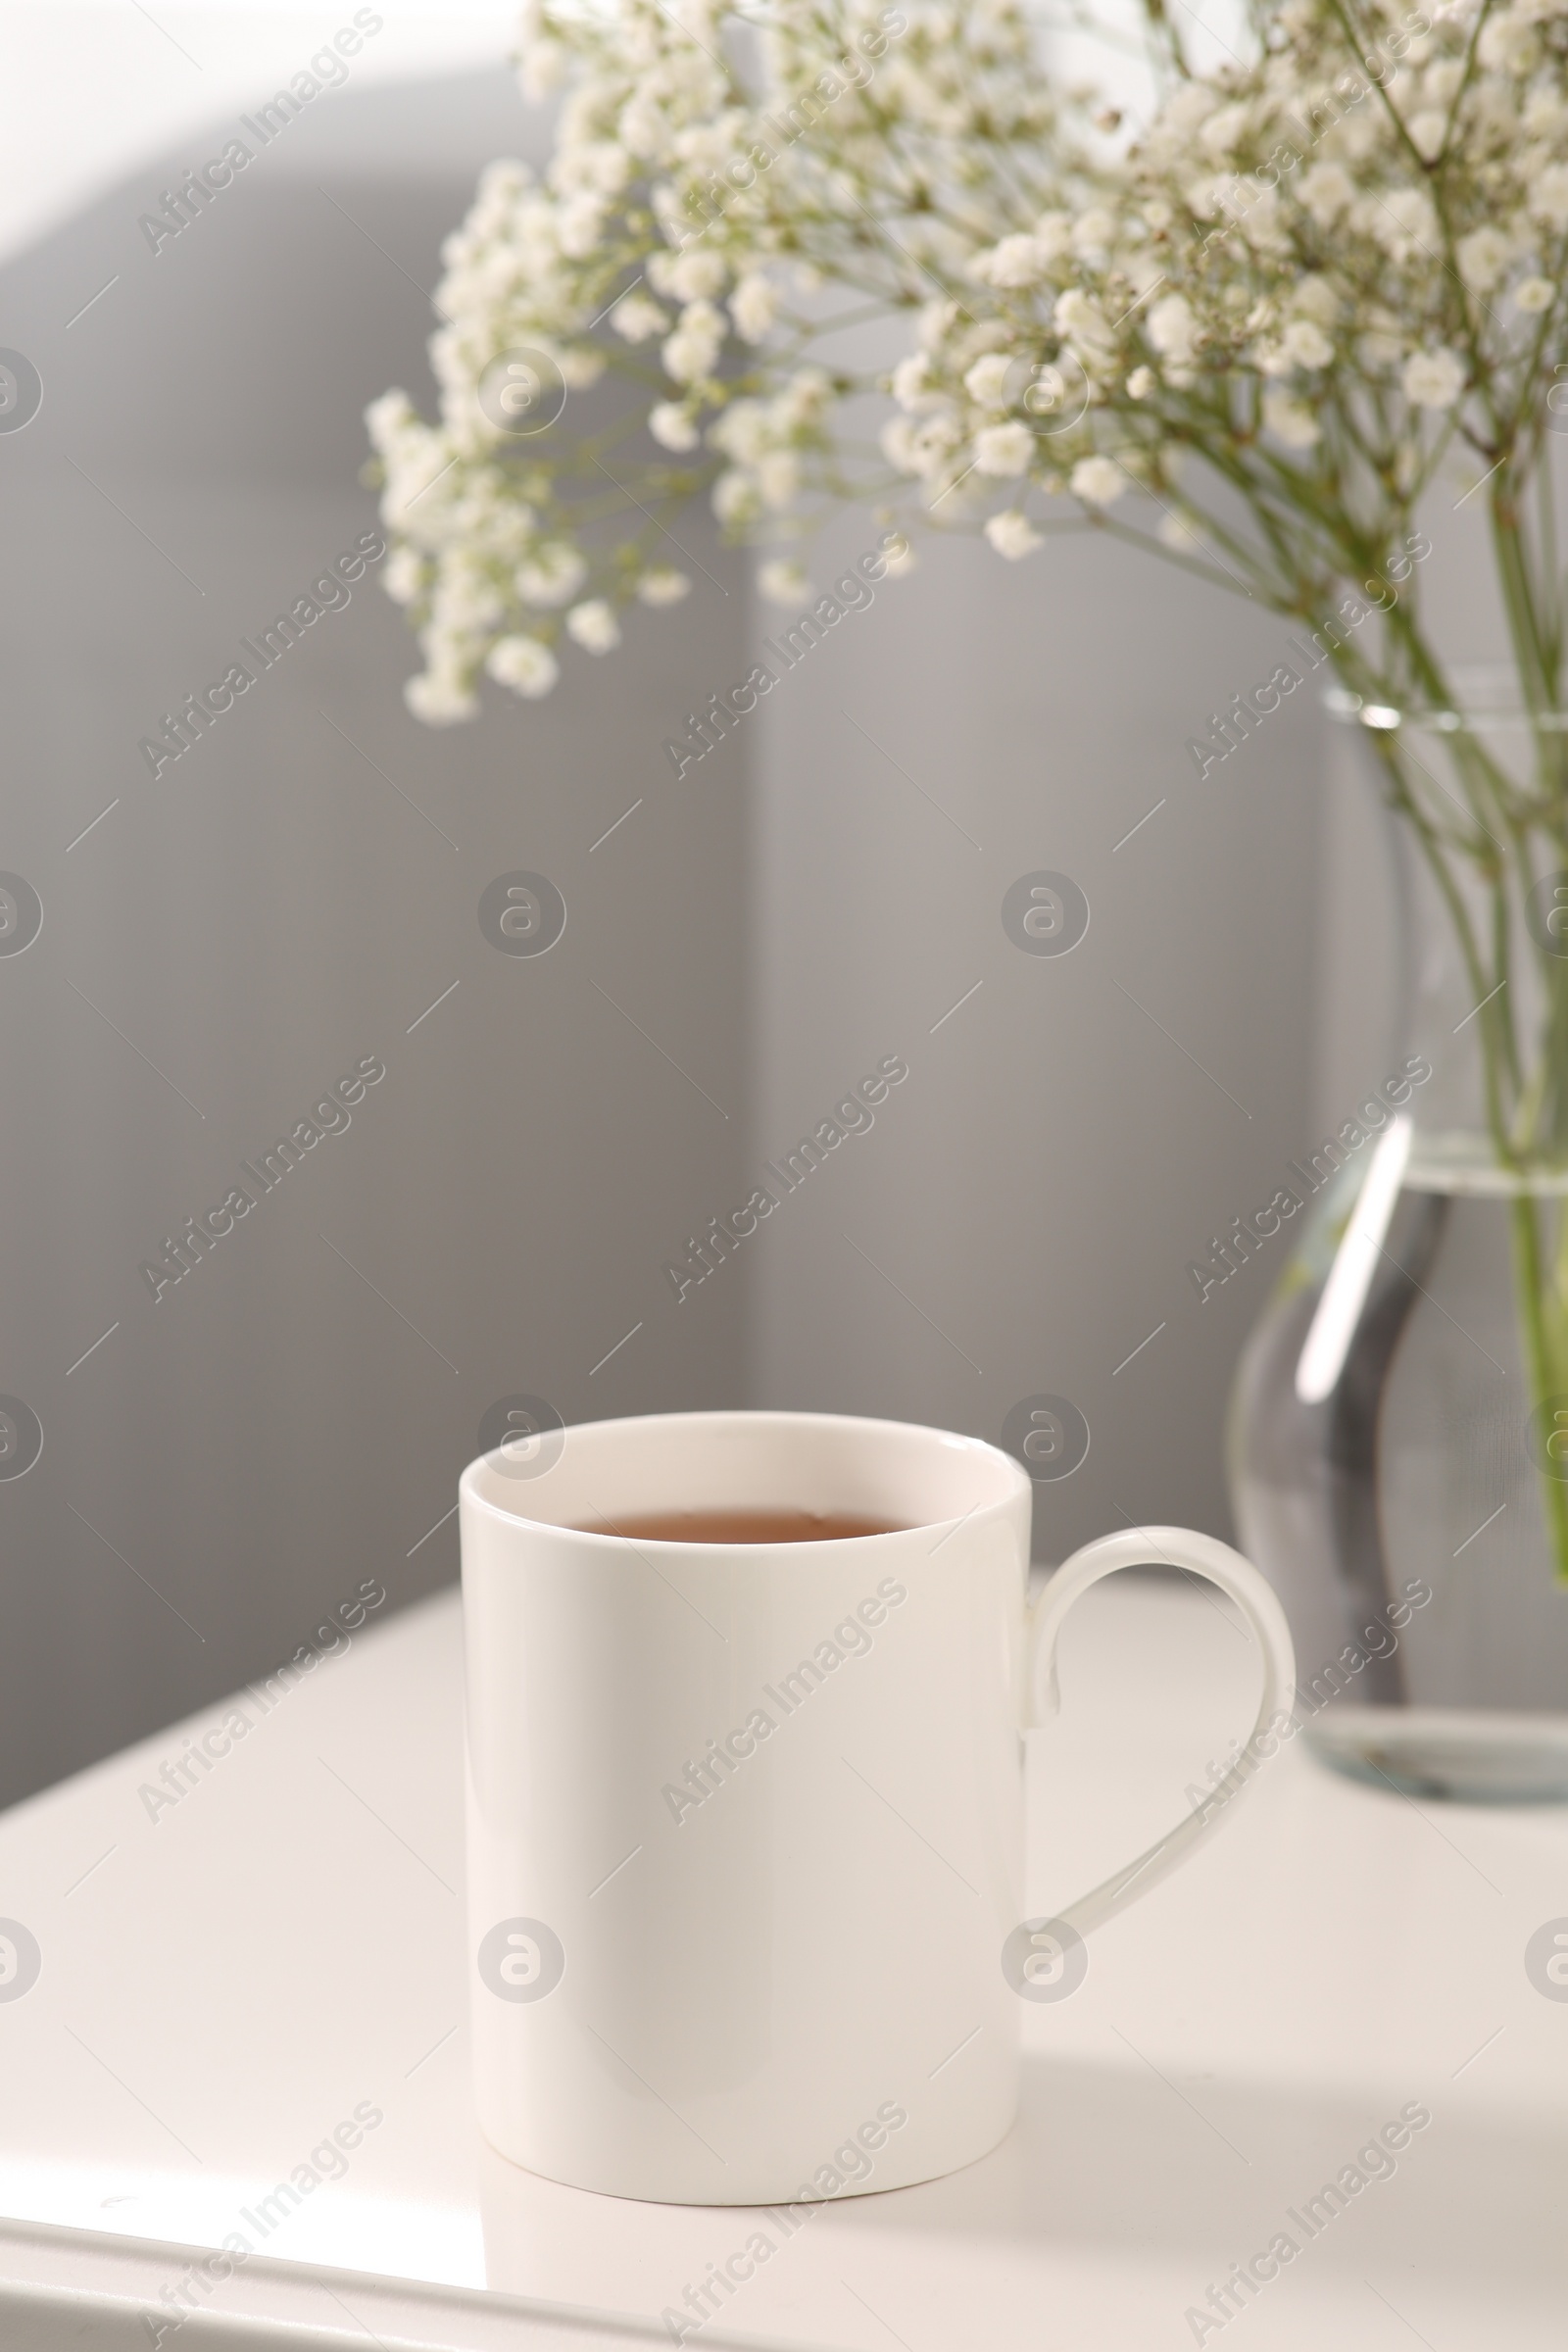 Photo of Ceramic mug with tea on white bedside table indoors. Mockup for design